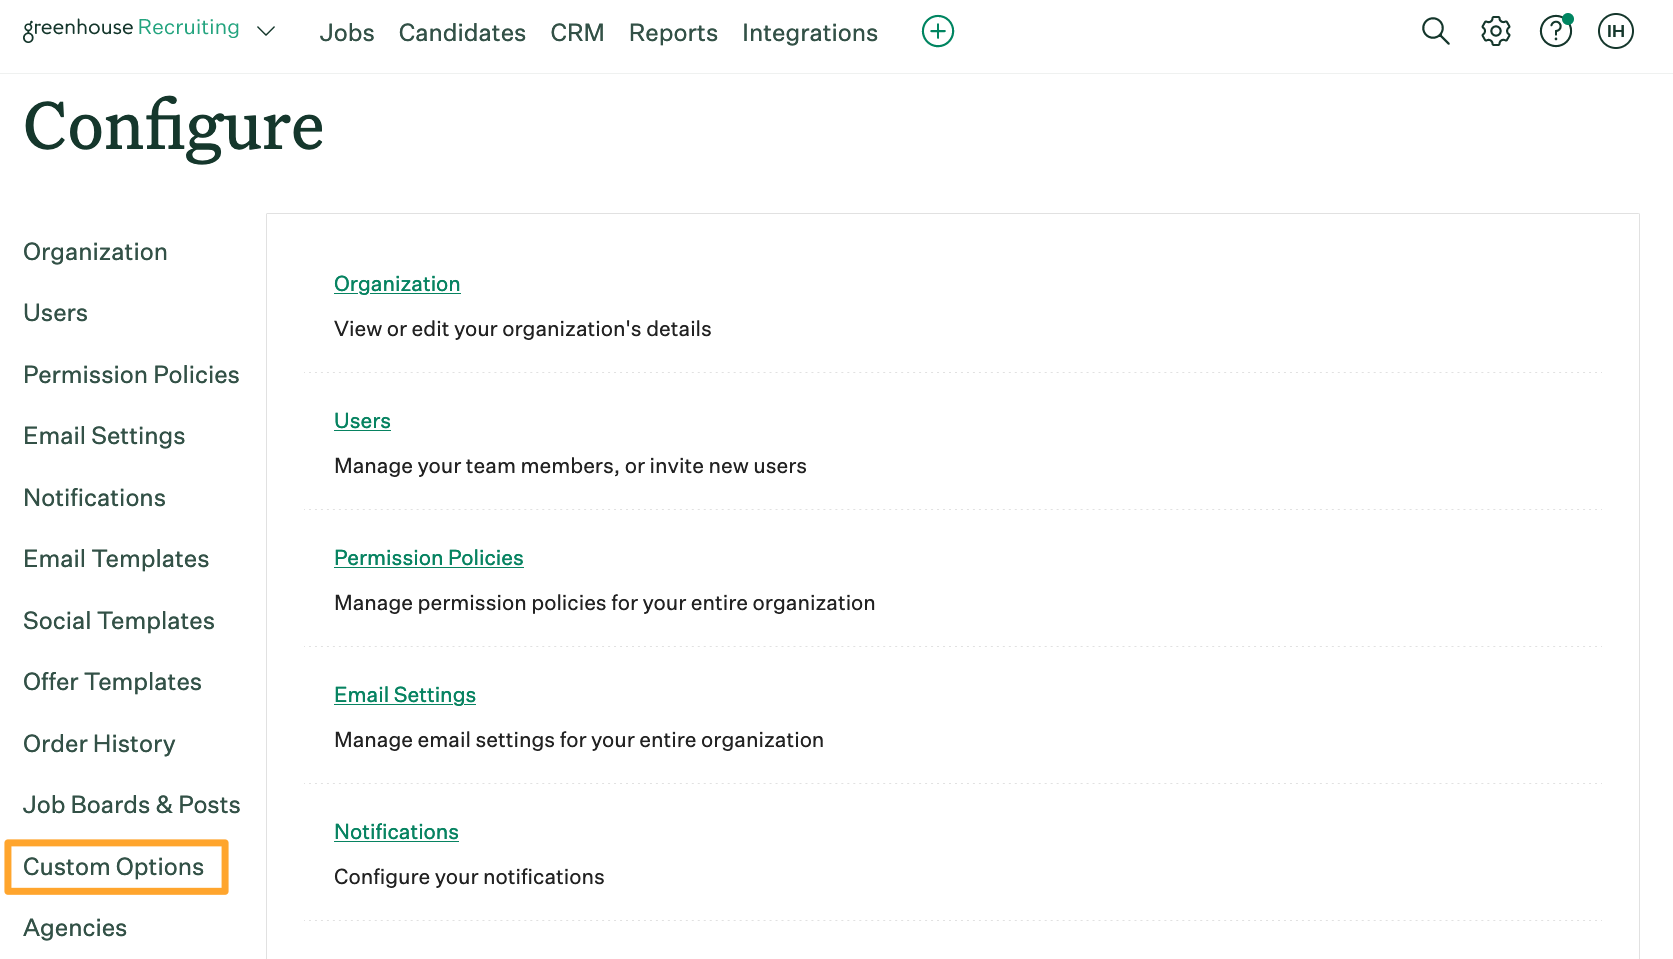 Screenshot of custom options menu item 